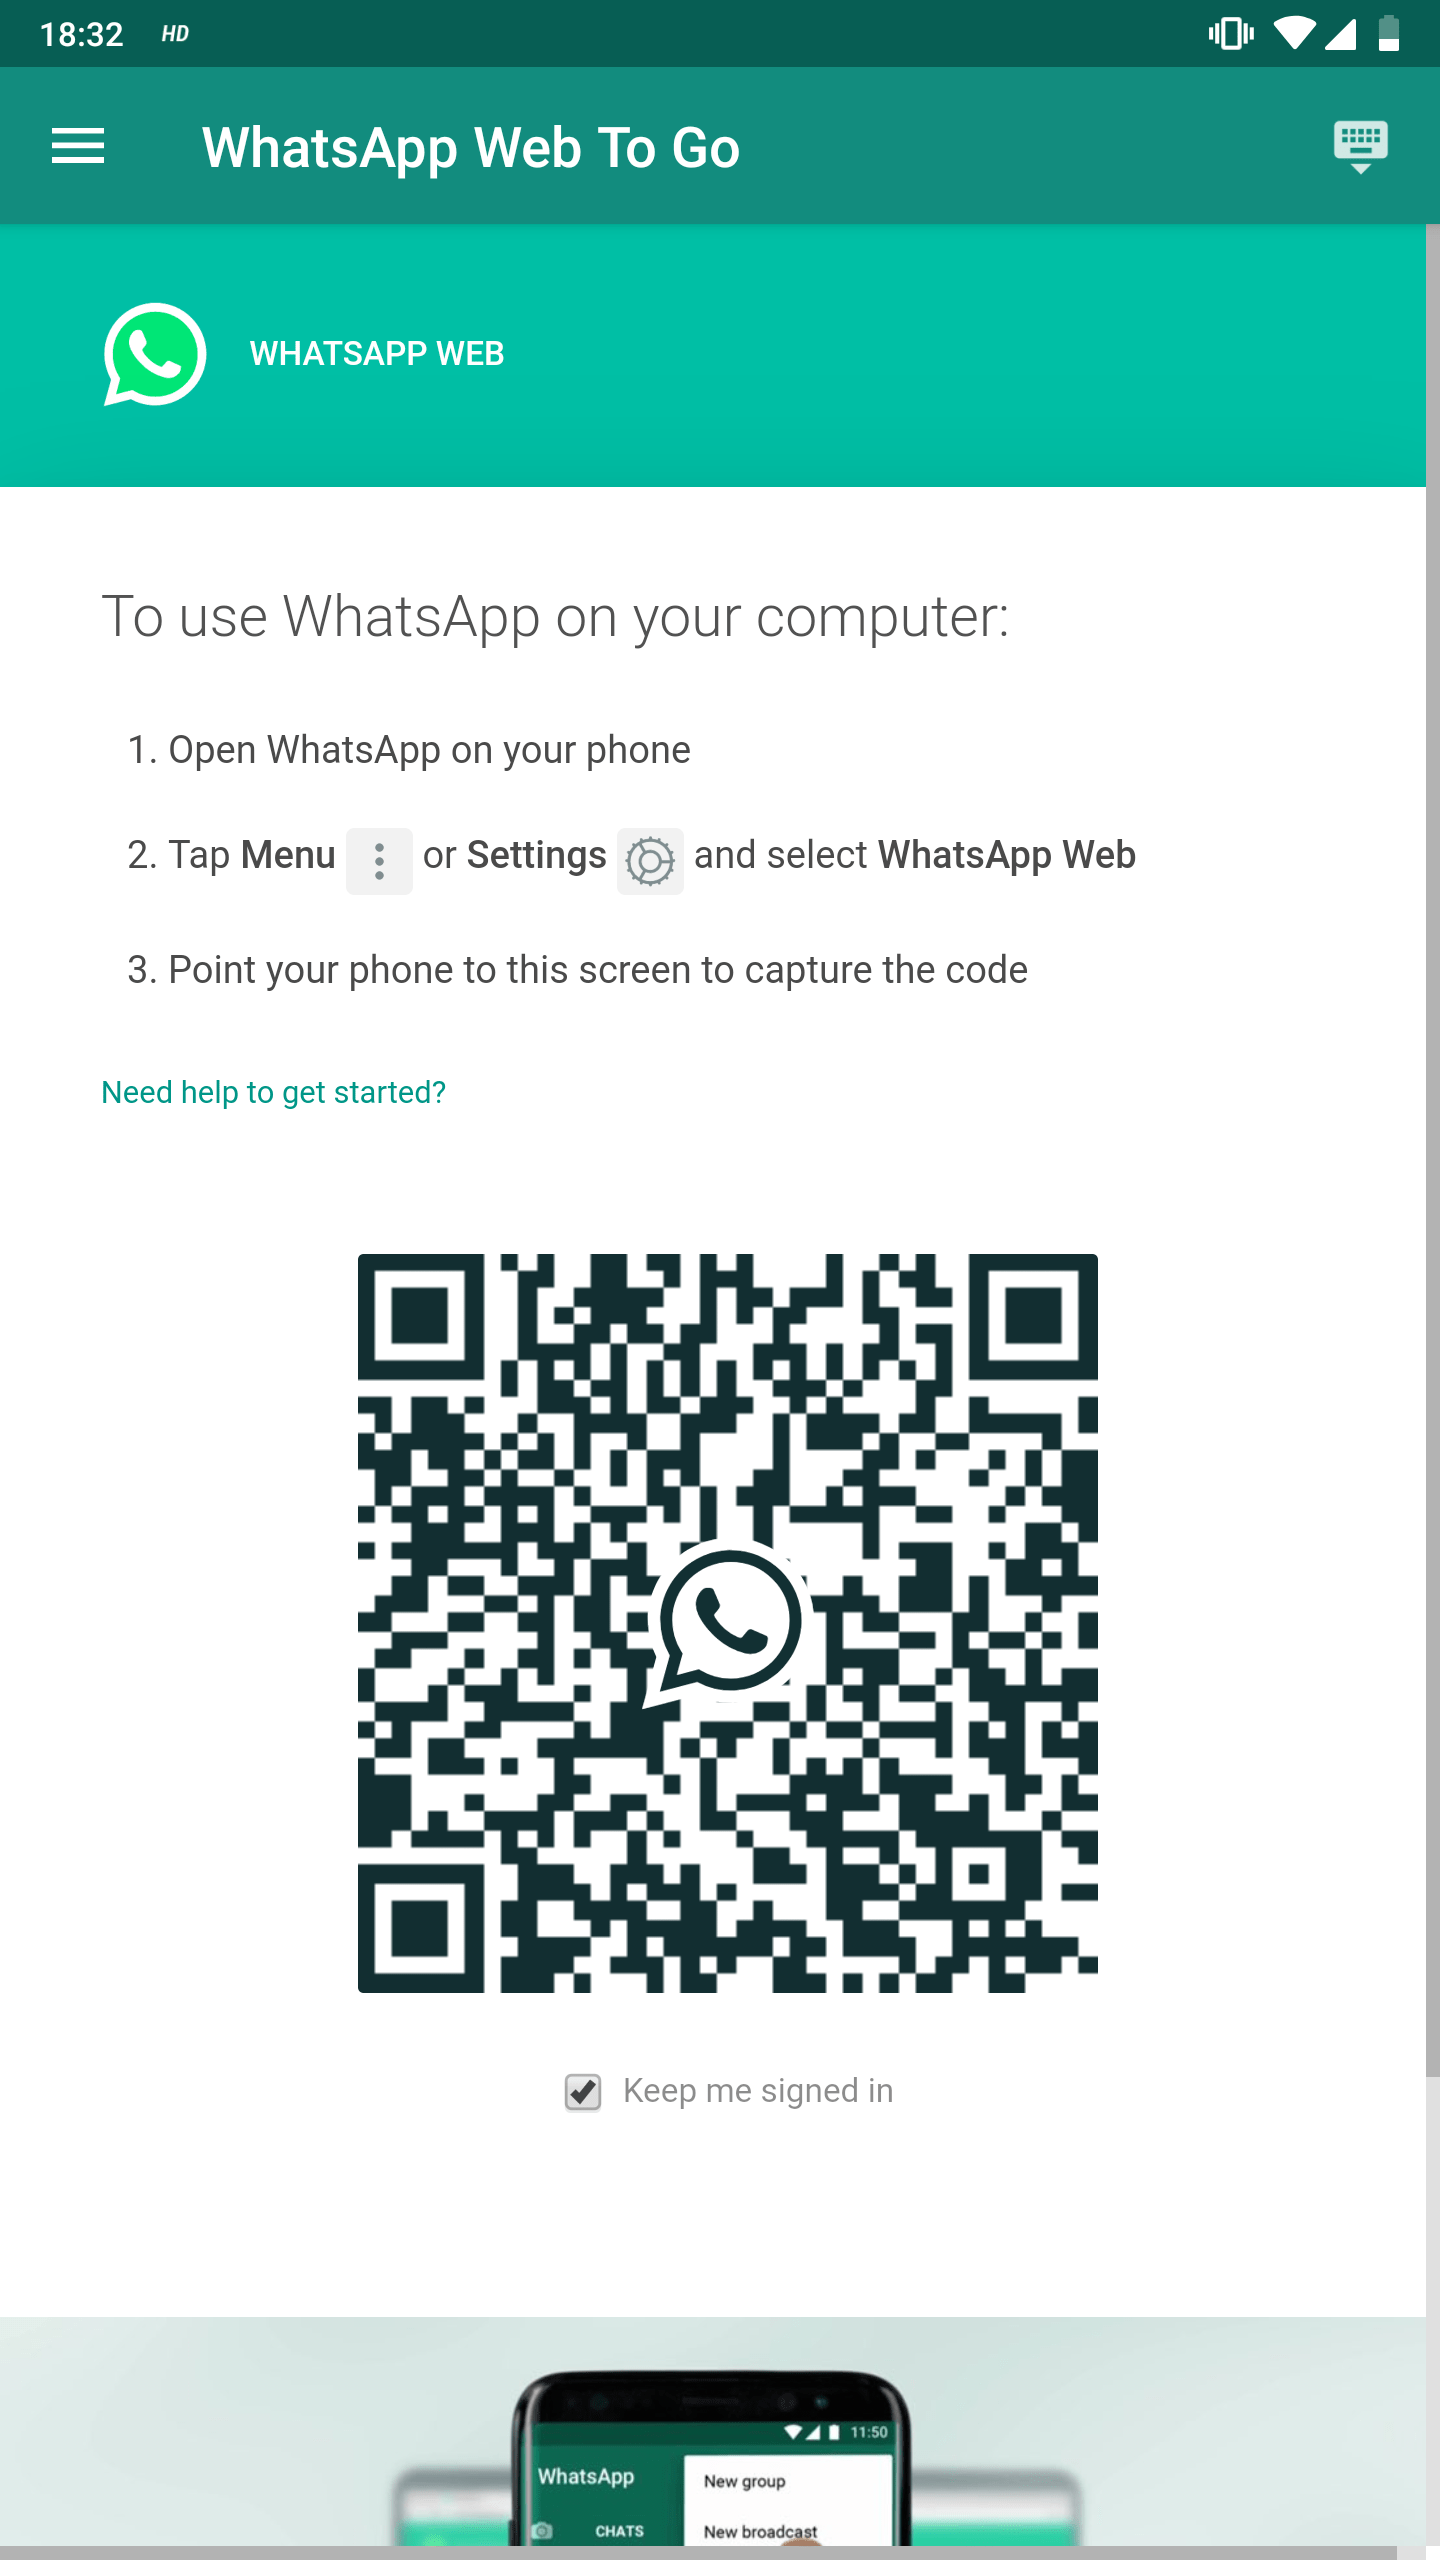 WhatsApp (2.2336.7.0) free downloads